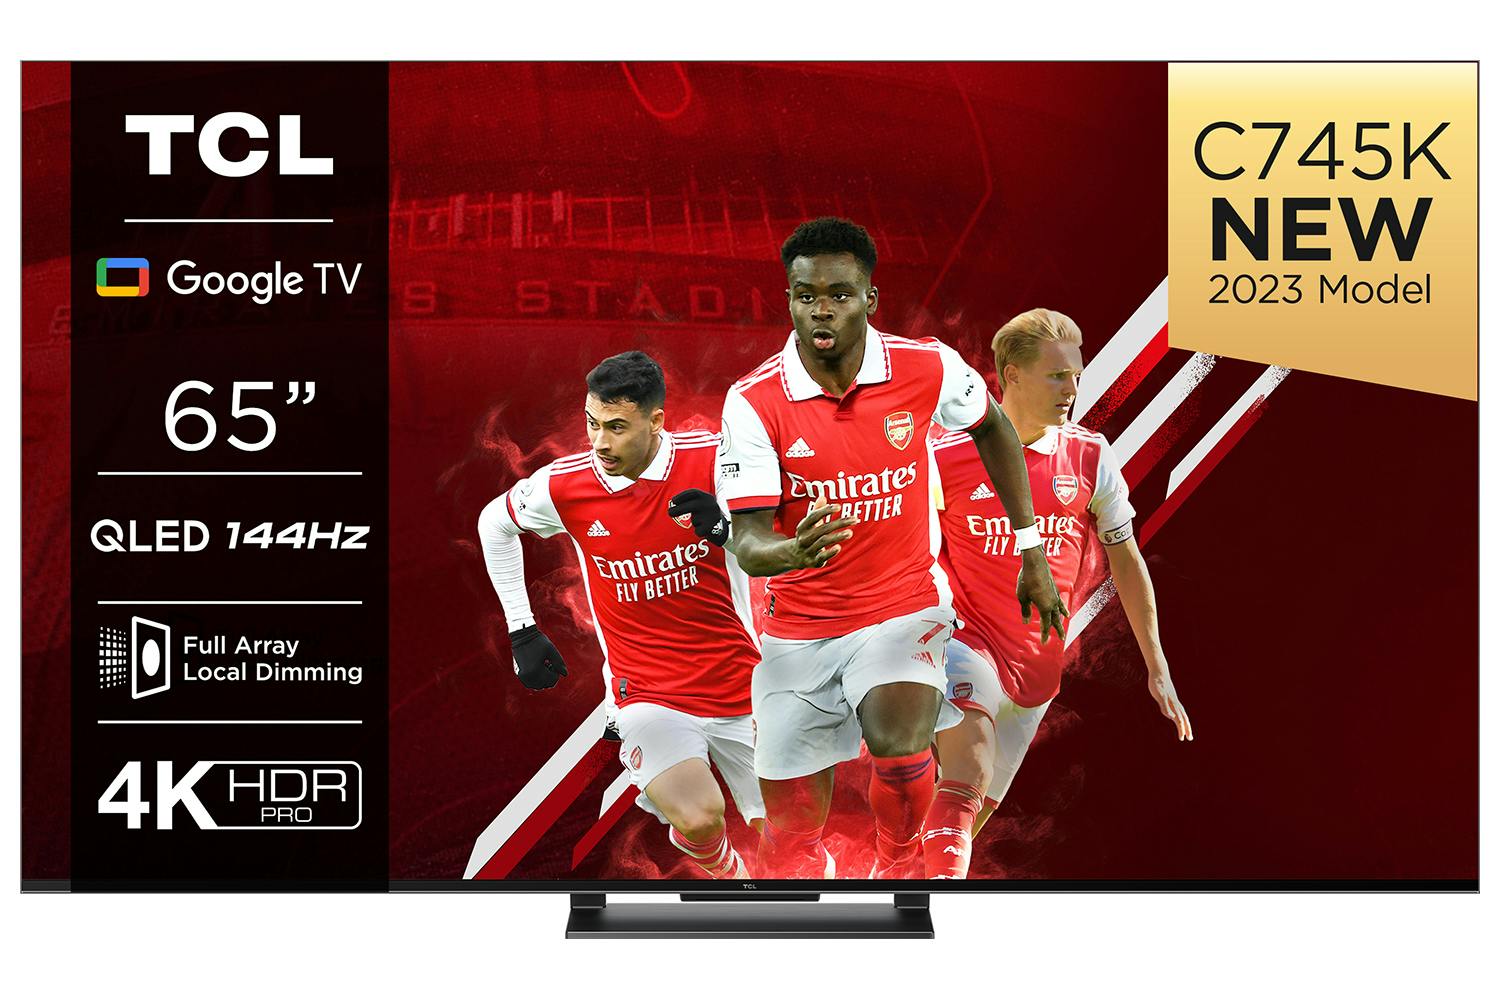 TCL 65" 4K Ultra HD HDR QLED Smart TV | 65C745K